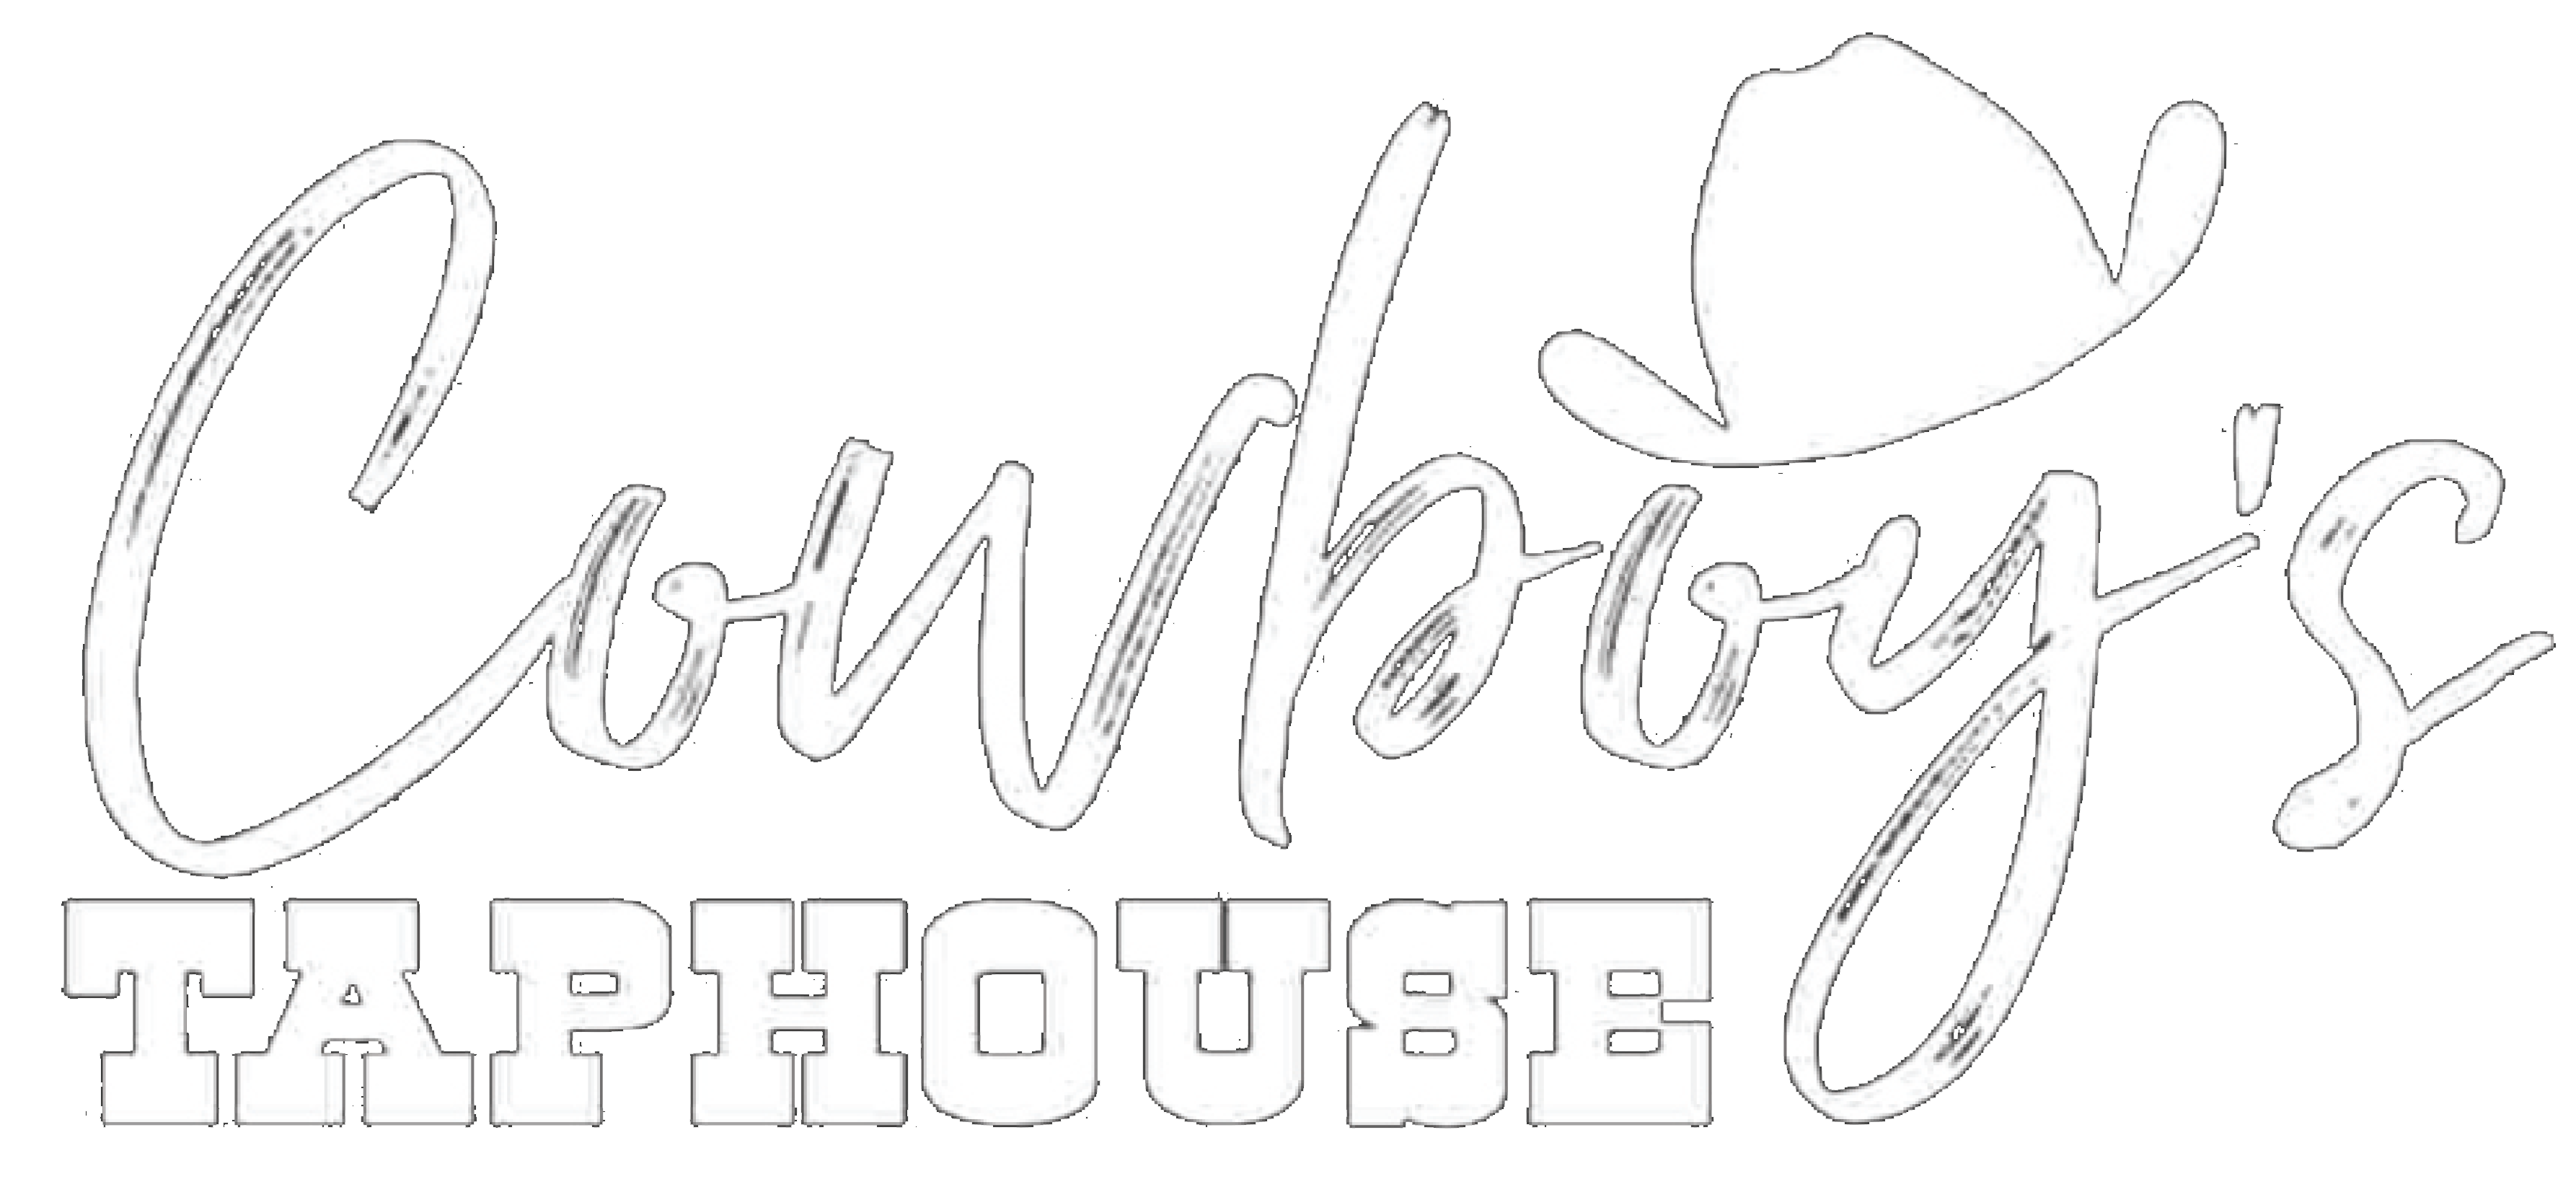 Cowboys Taphouse